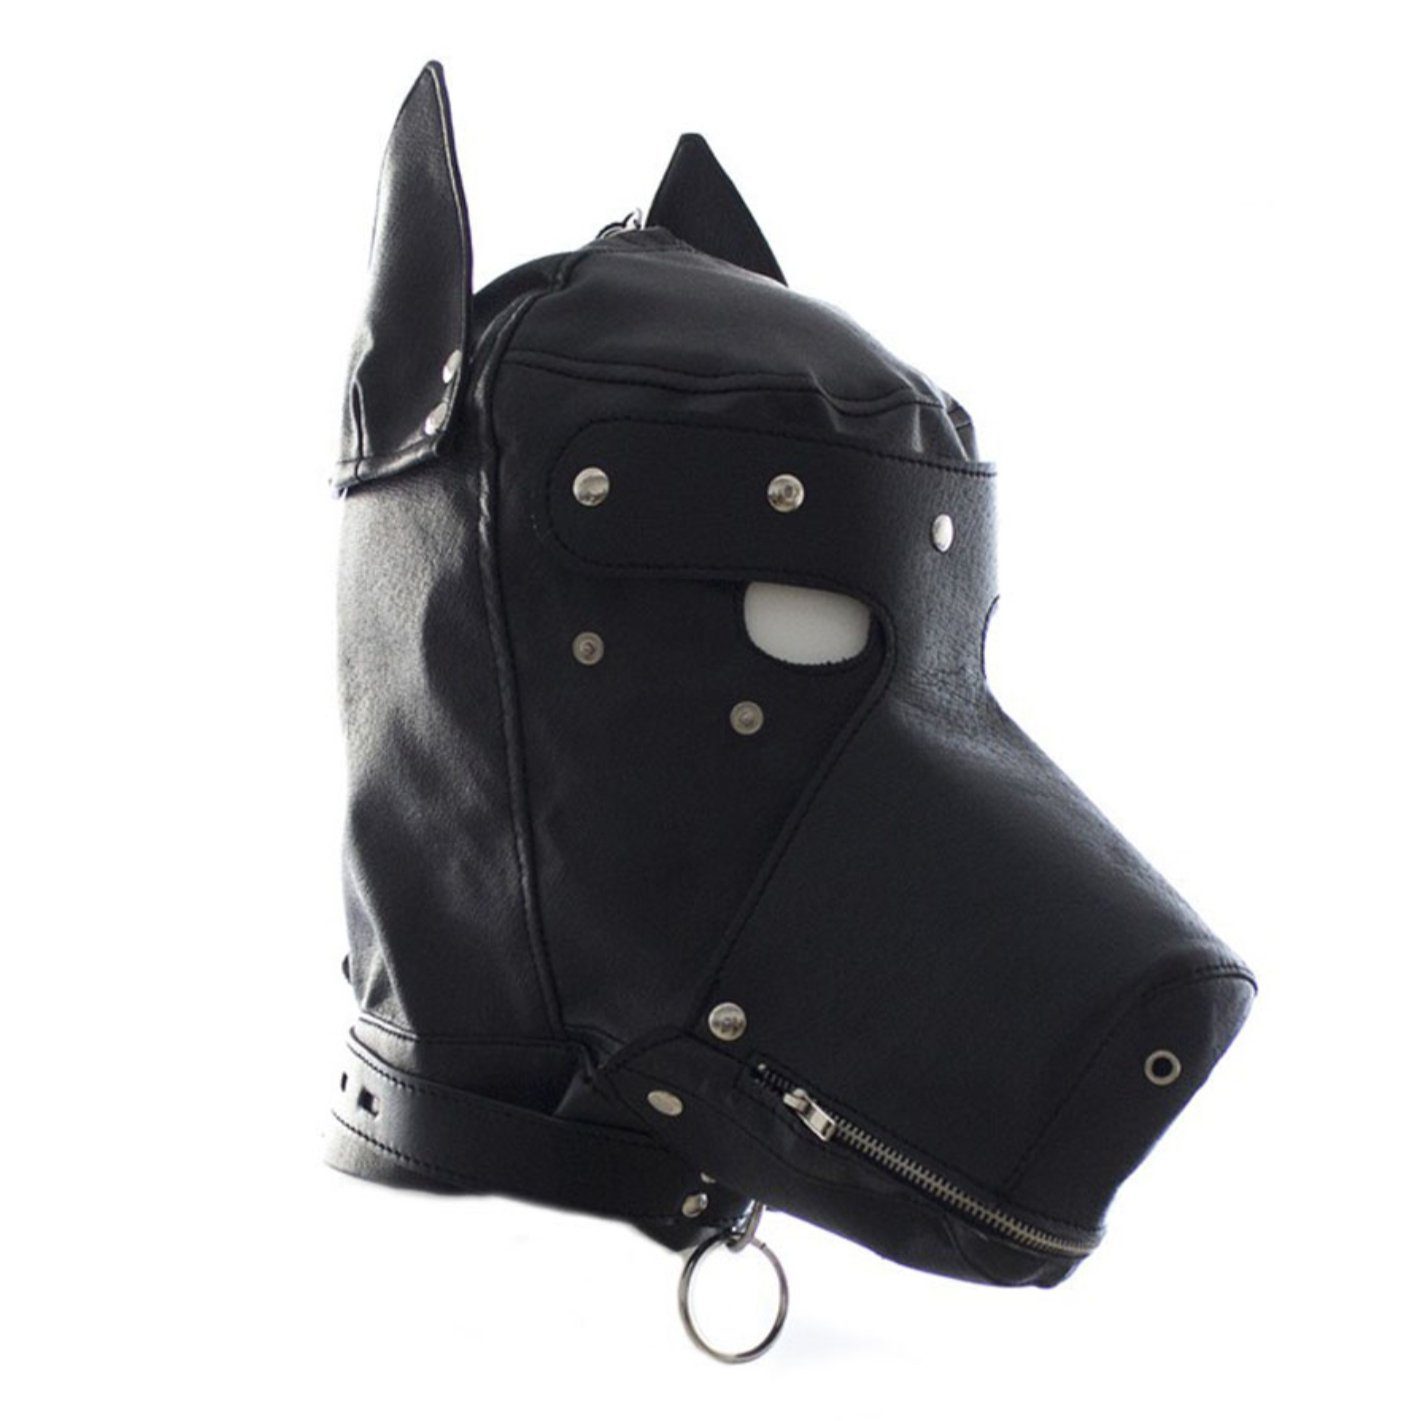 Hund Bondage-Maske Kopfmaske Sandritas Erotik-Maske